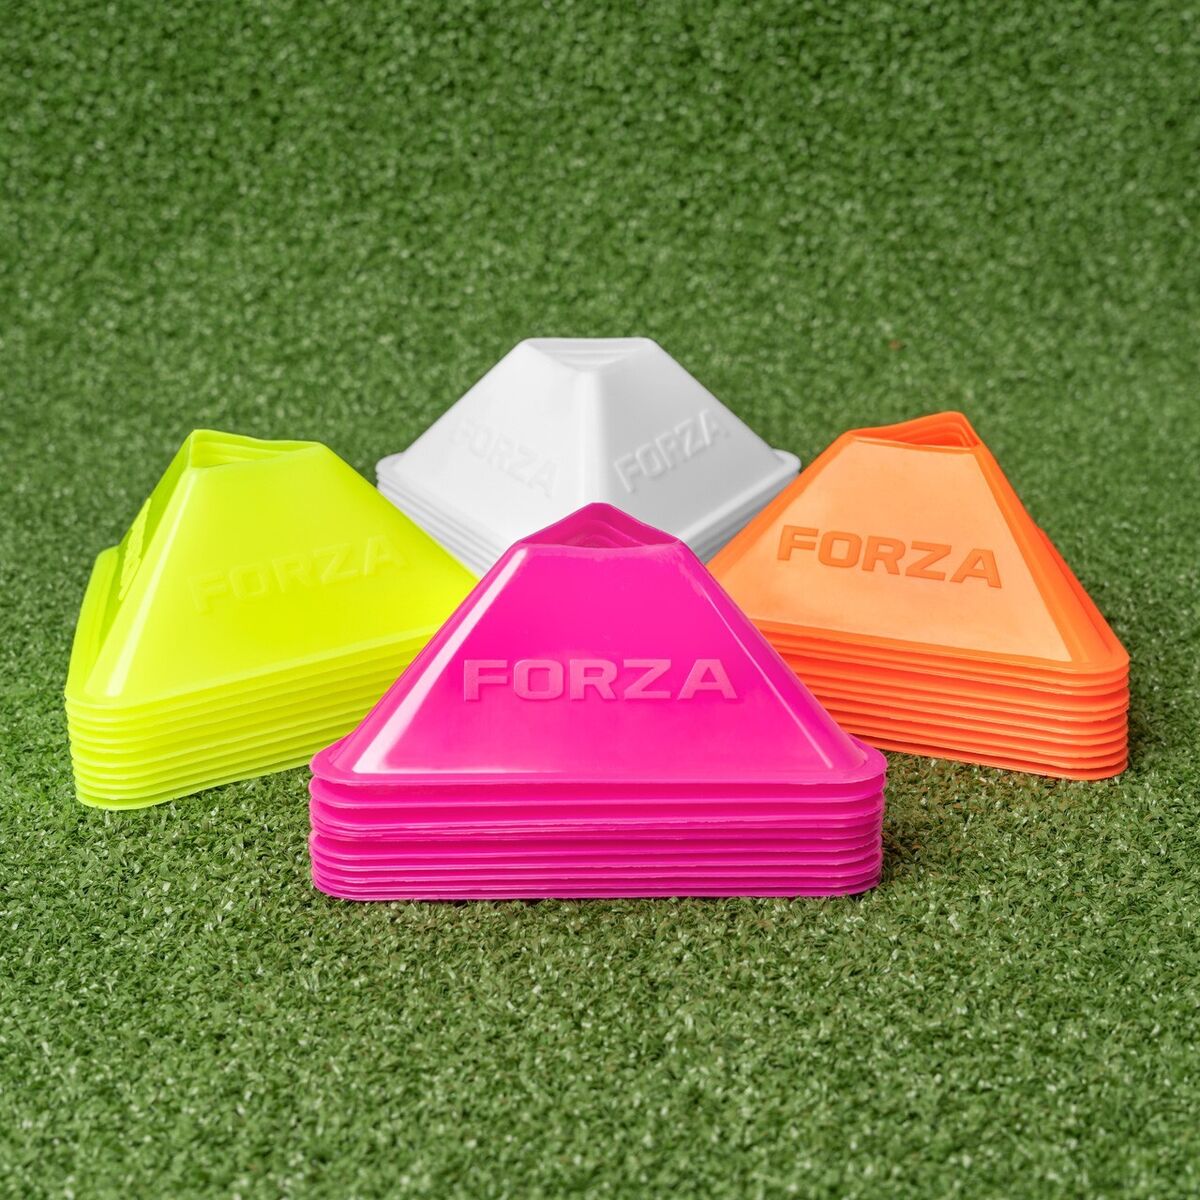 Forza Training Cones